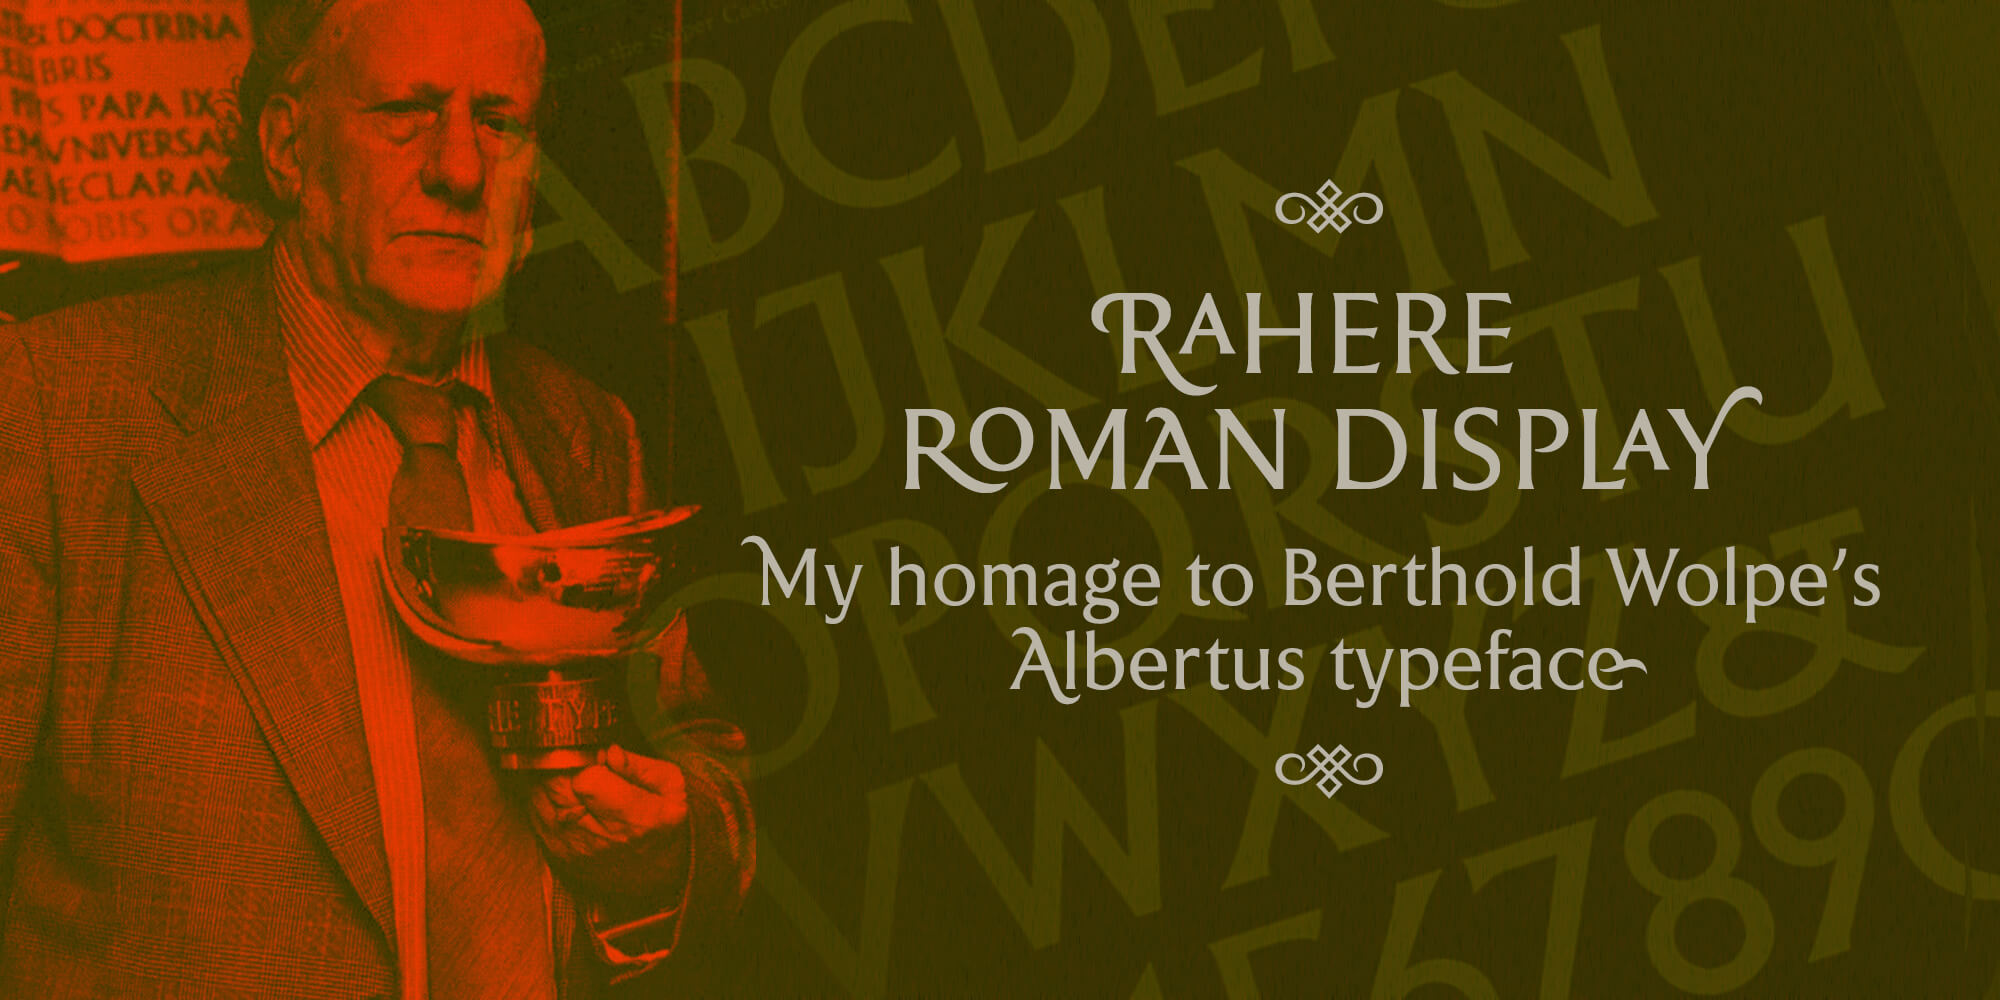 Rahere Roman Display, inspired by Berthold Wolpe's Albertus'